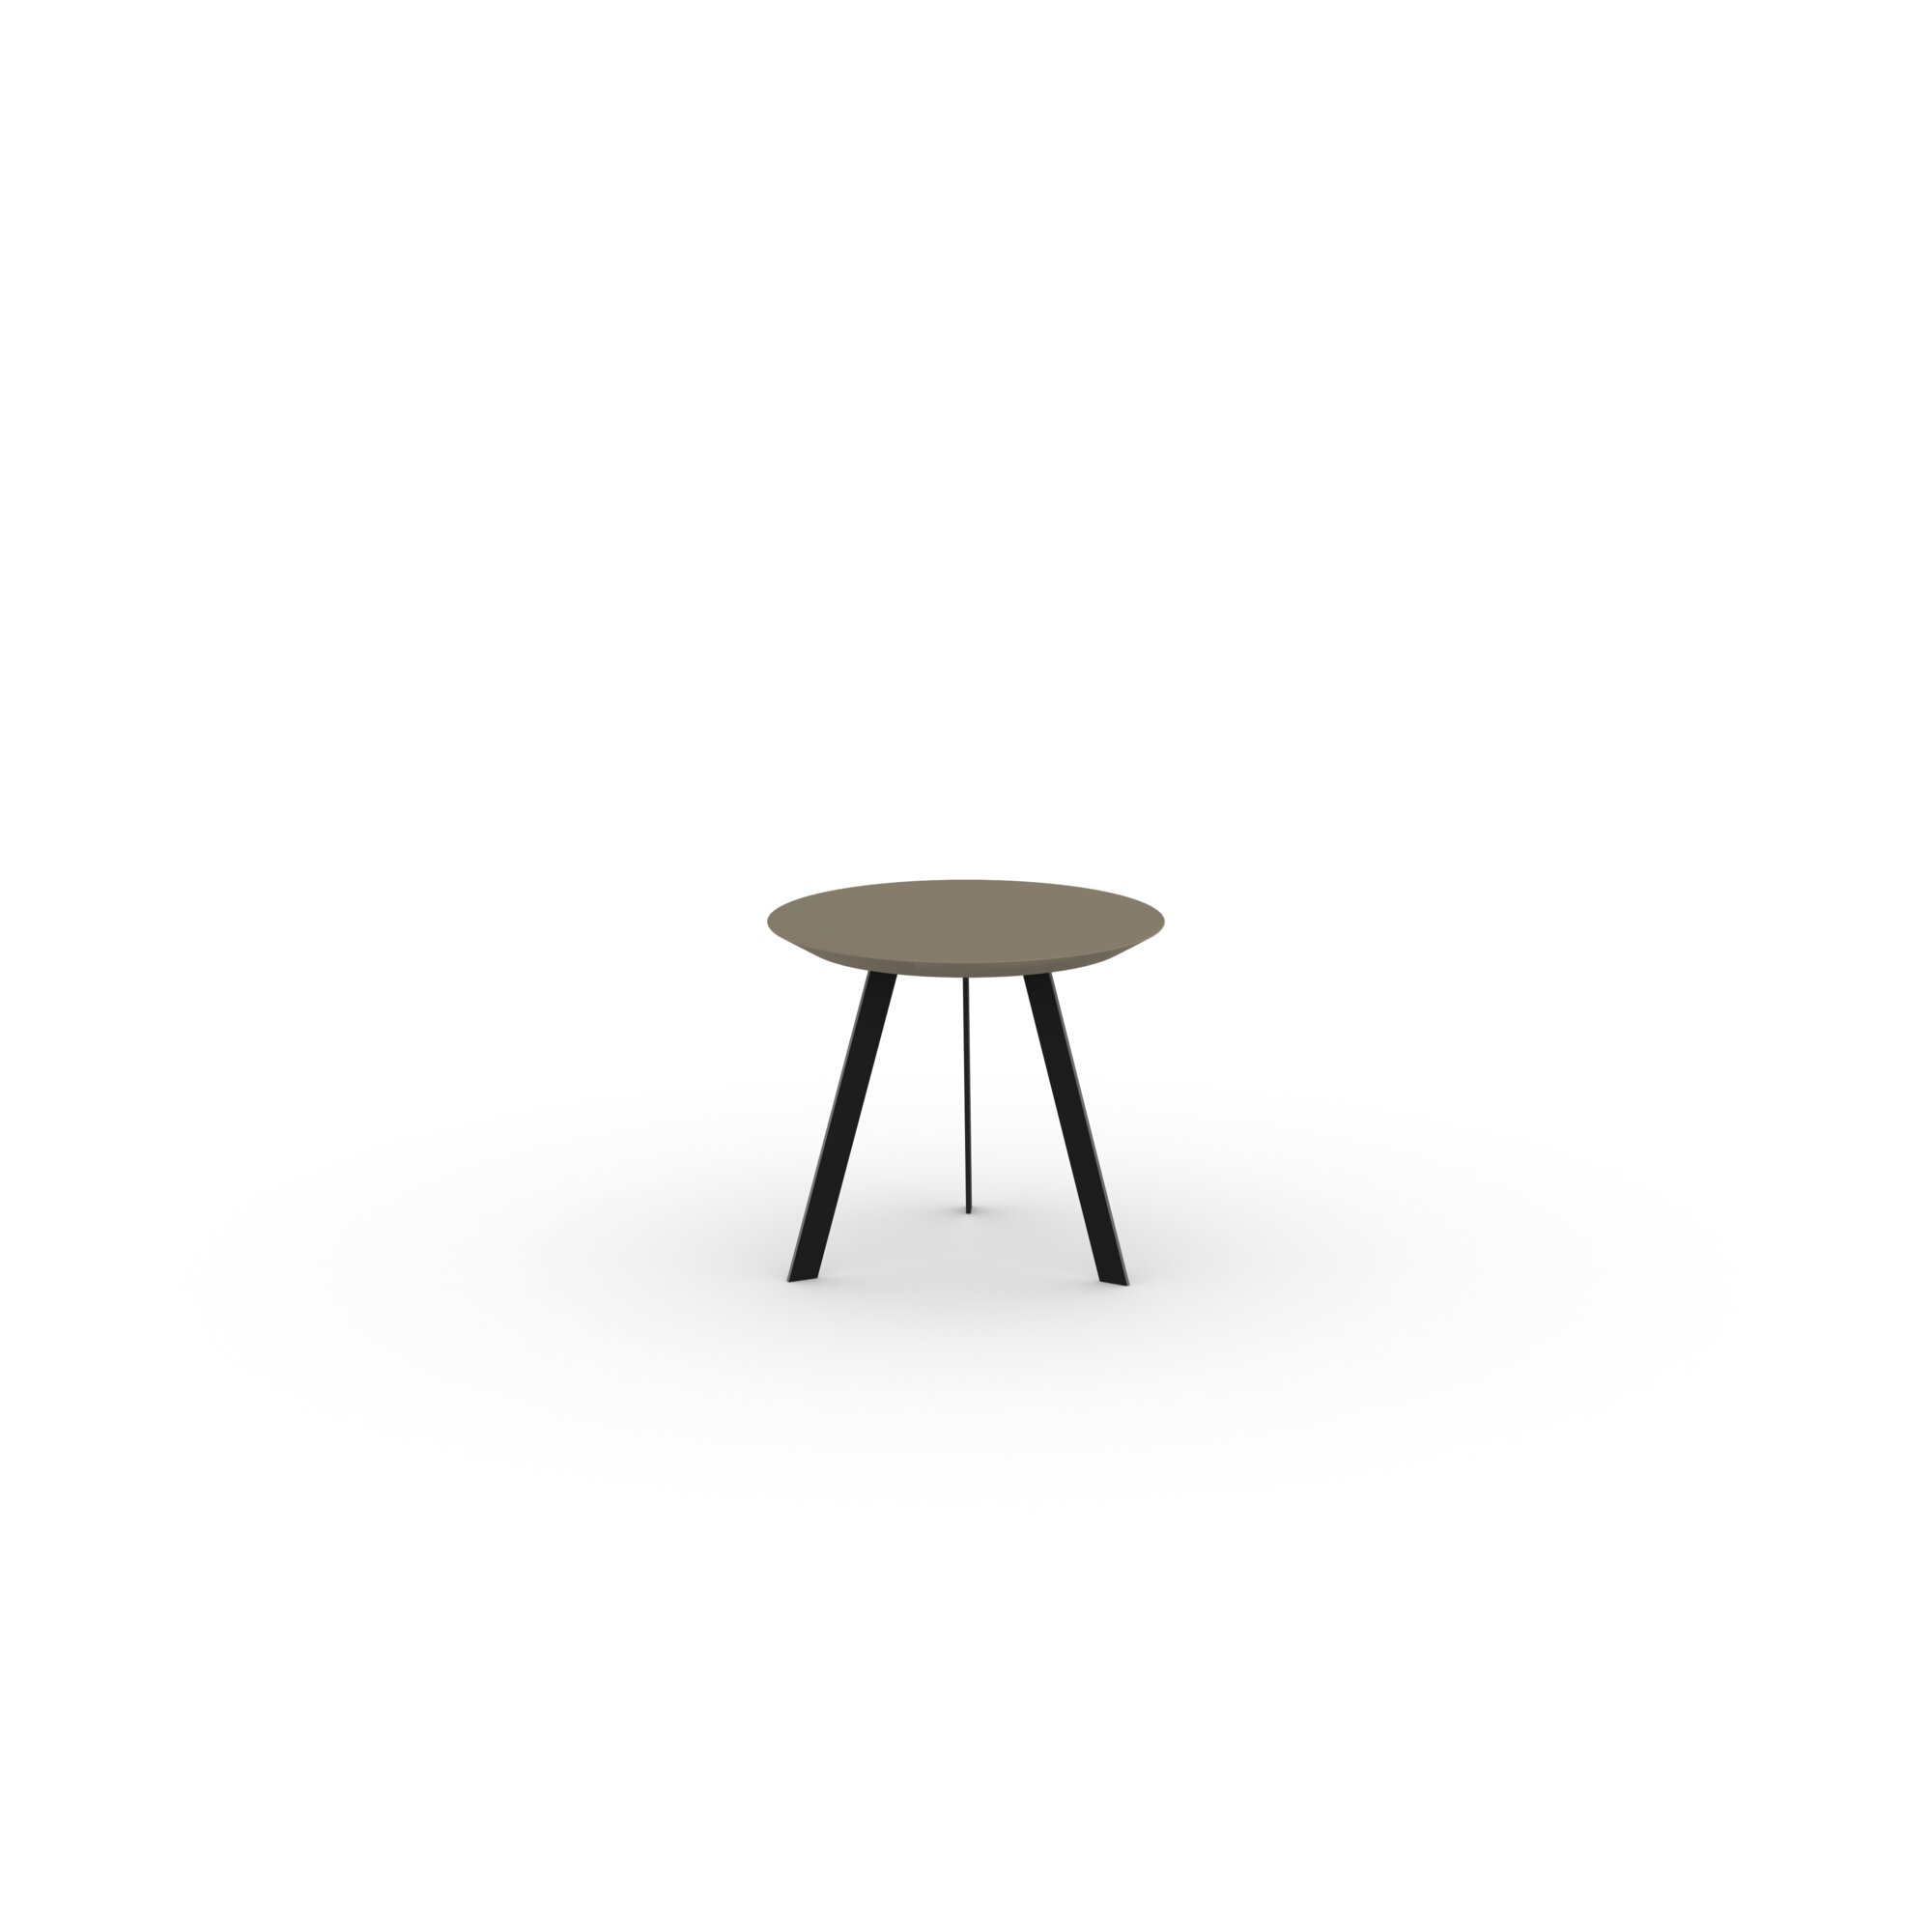 Design Coffee Table | New Co Coffee Table 50 Round Black | HPL Fenix castoro ottawa | Studio HENK| 